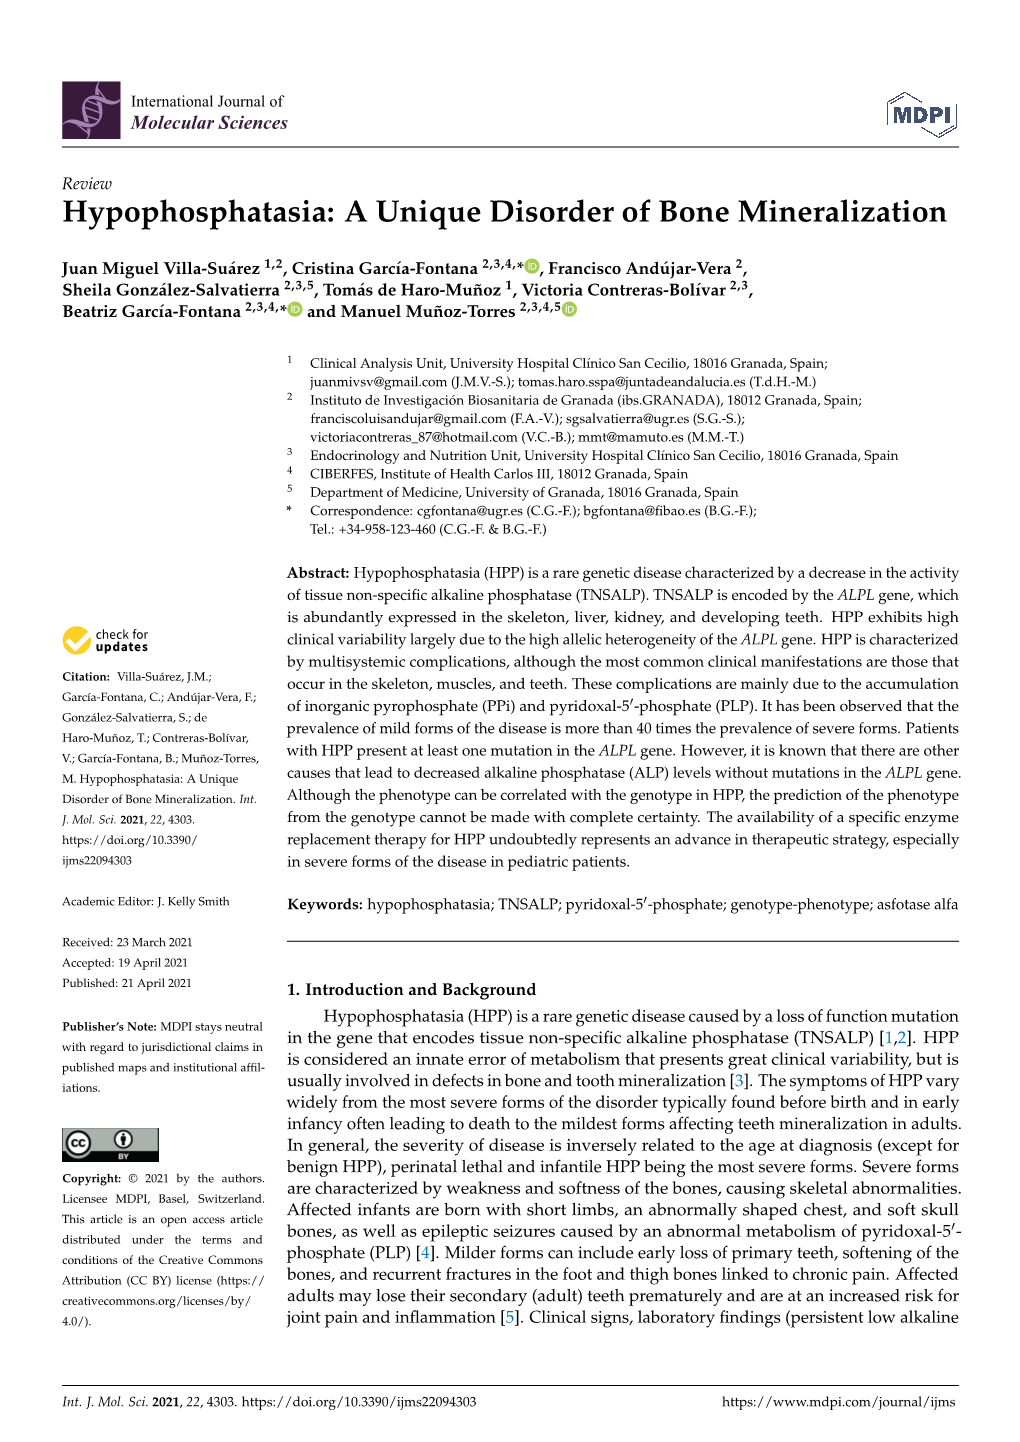 Hypophosphatasia: a Unique Disorder of Bone Mineralization